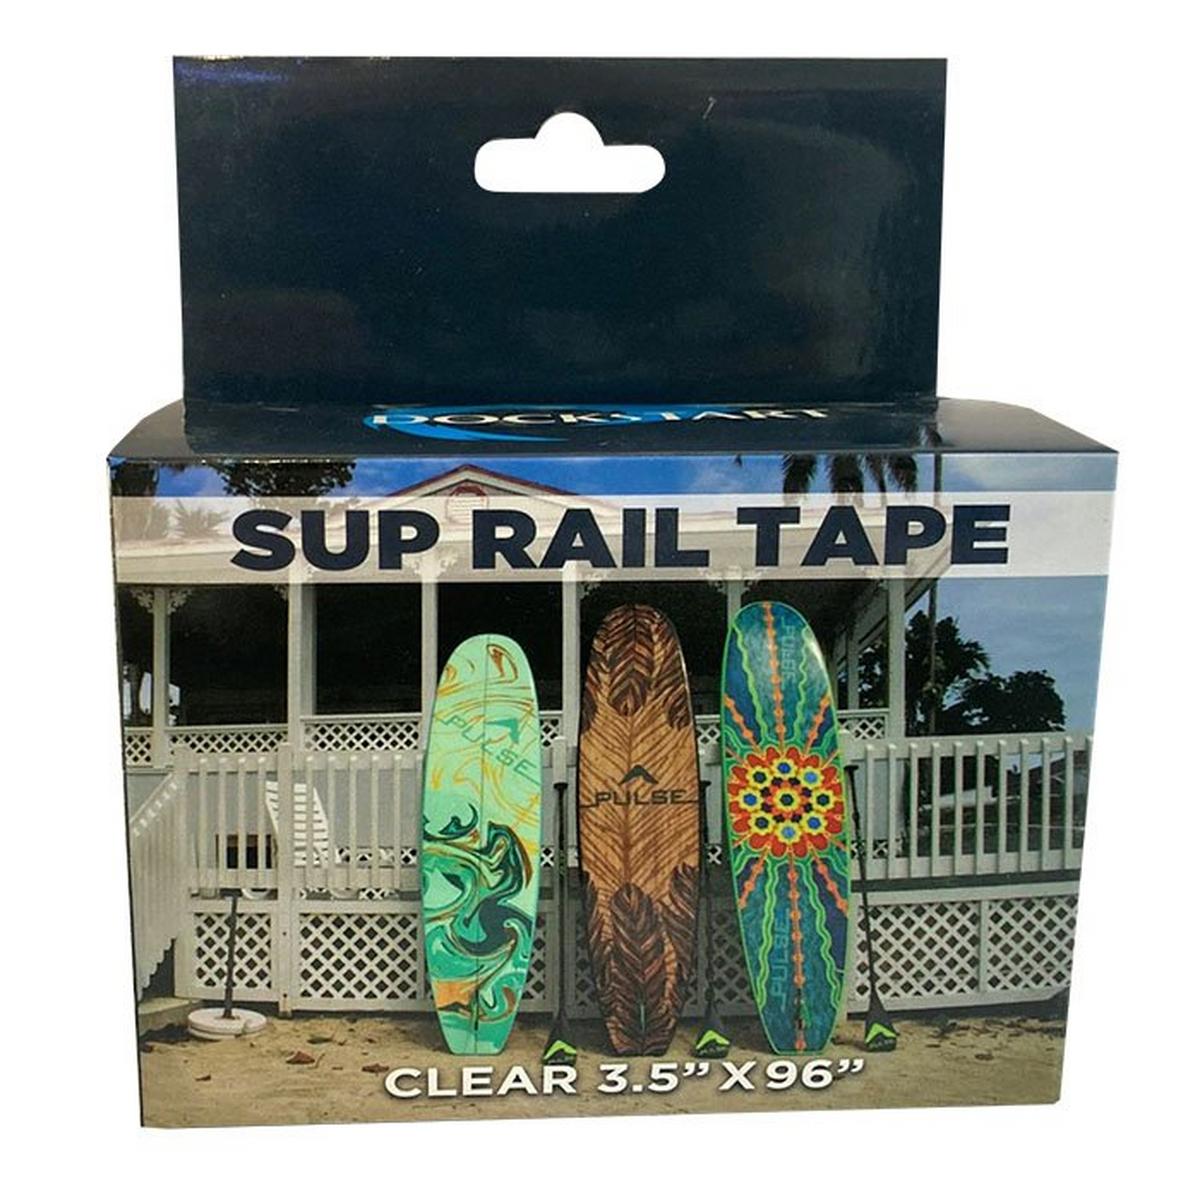 Dockstart SUP Rail Tape